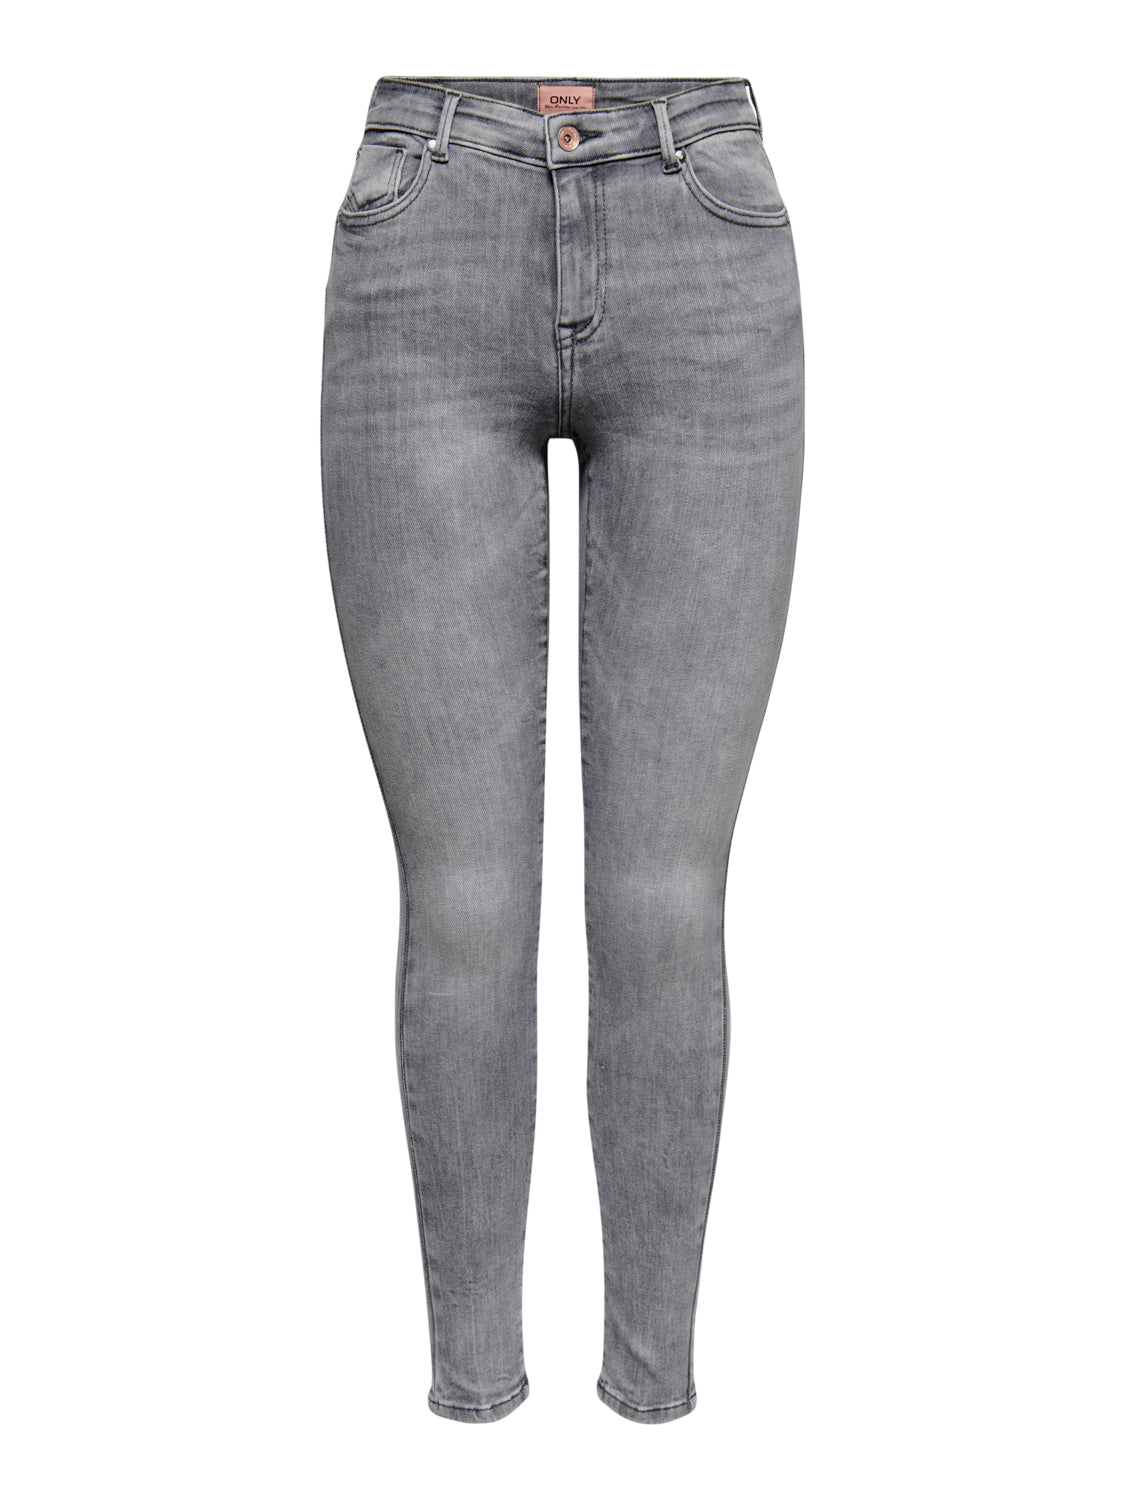 ONLPOWER Jeans - Grey Denim